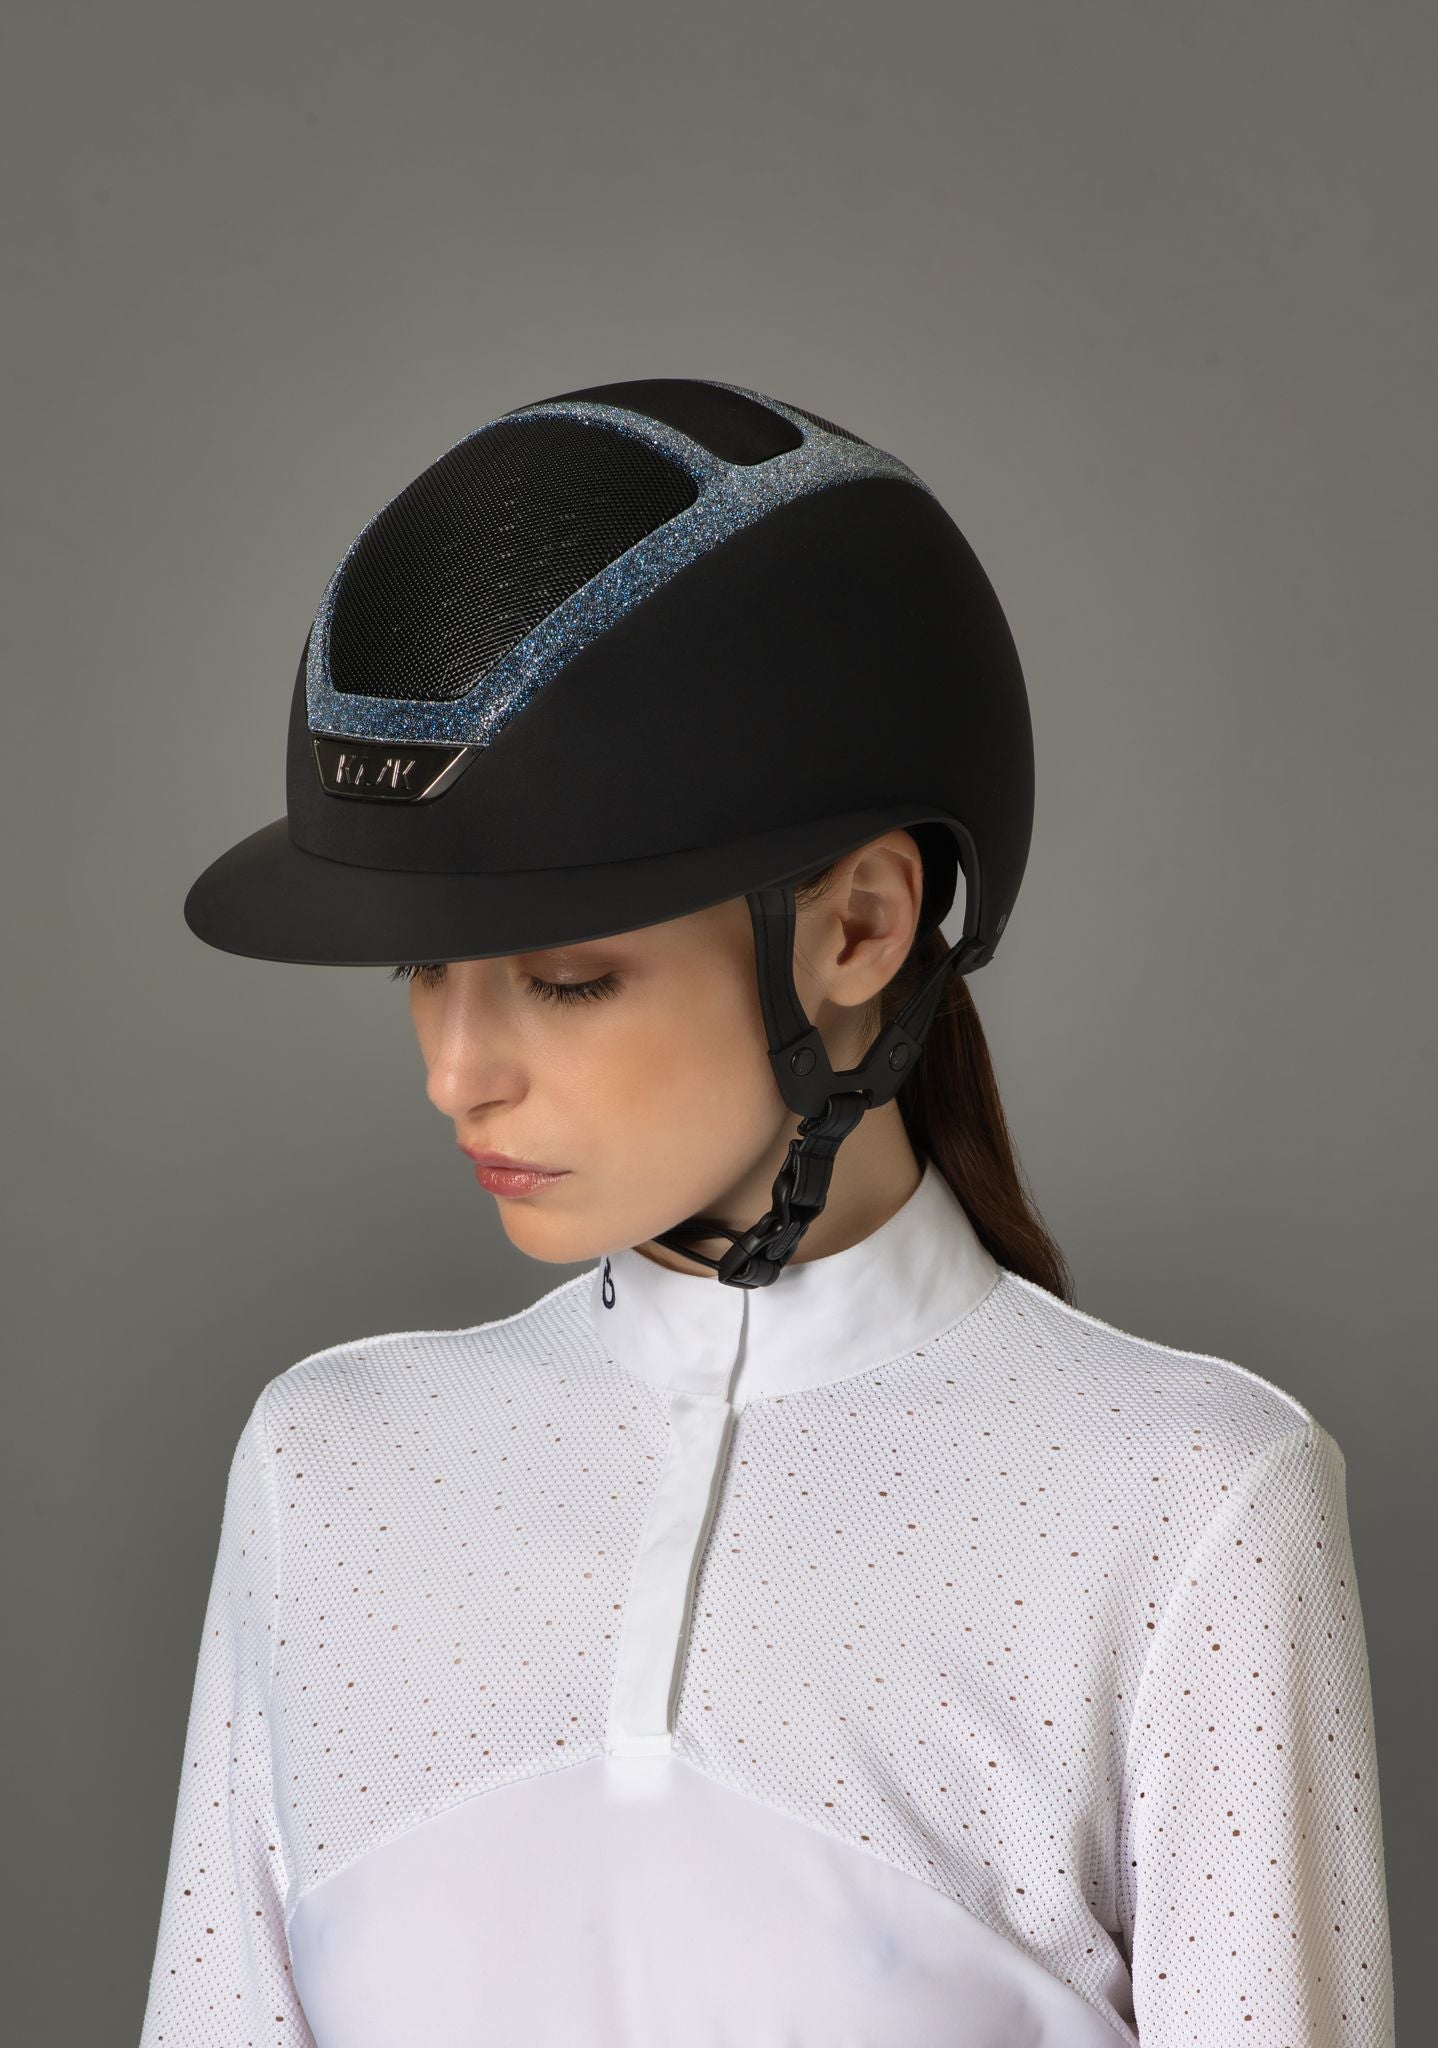 Luxury equestrian helmet